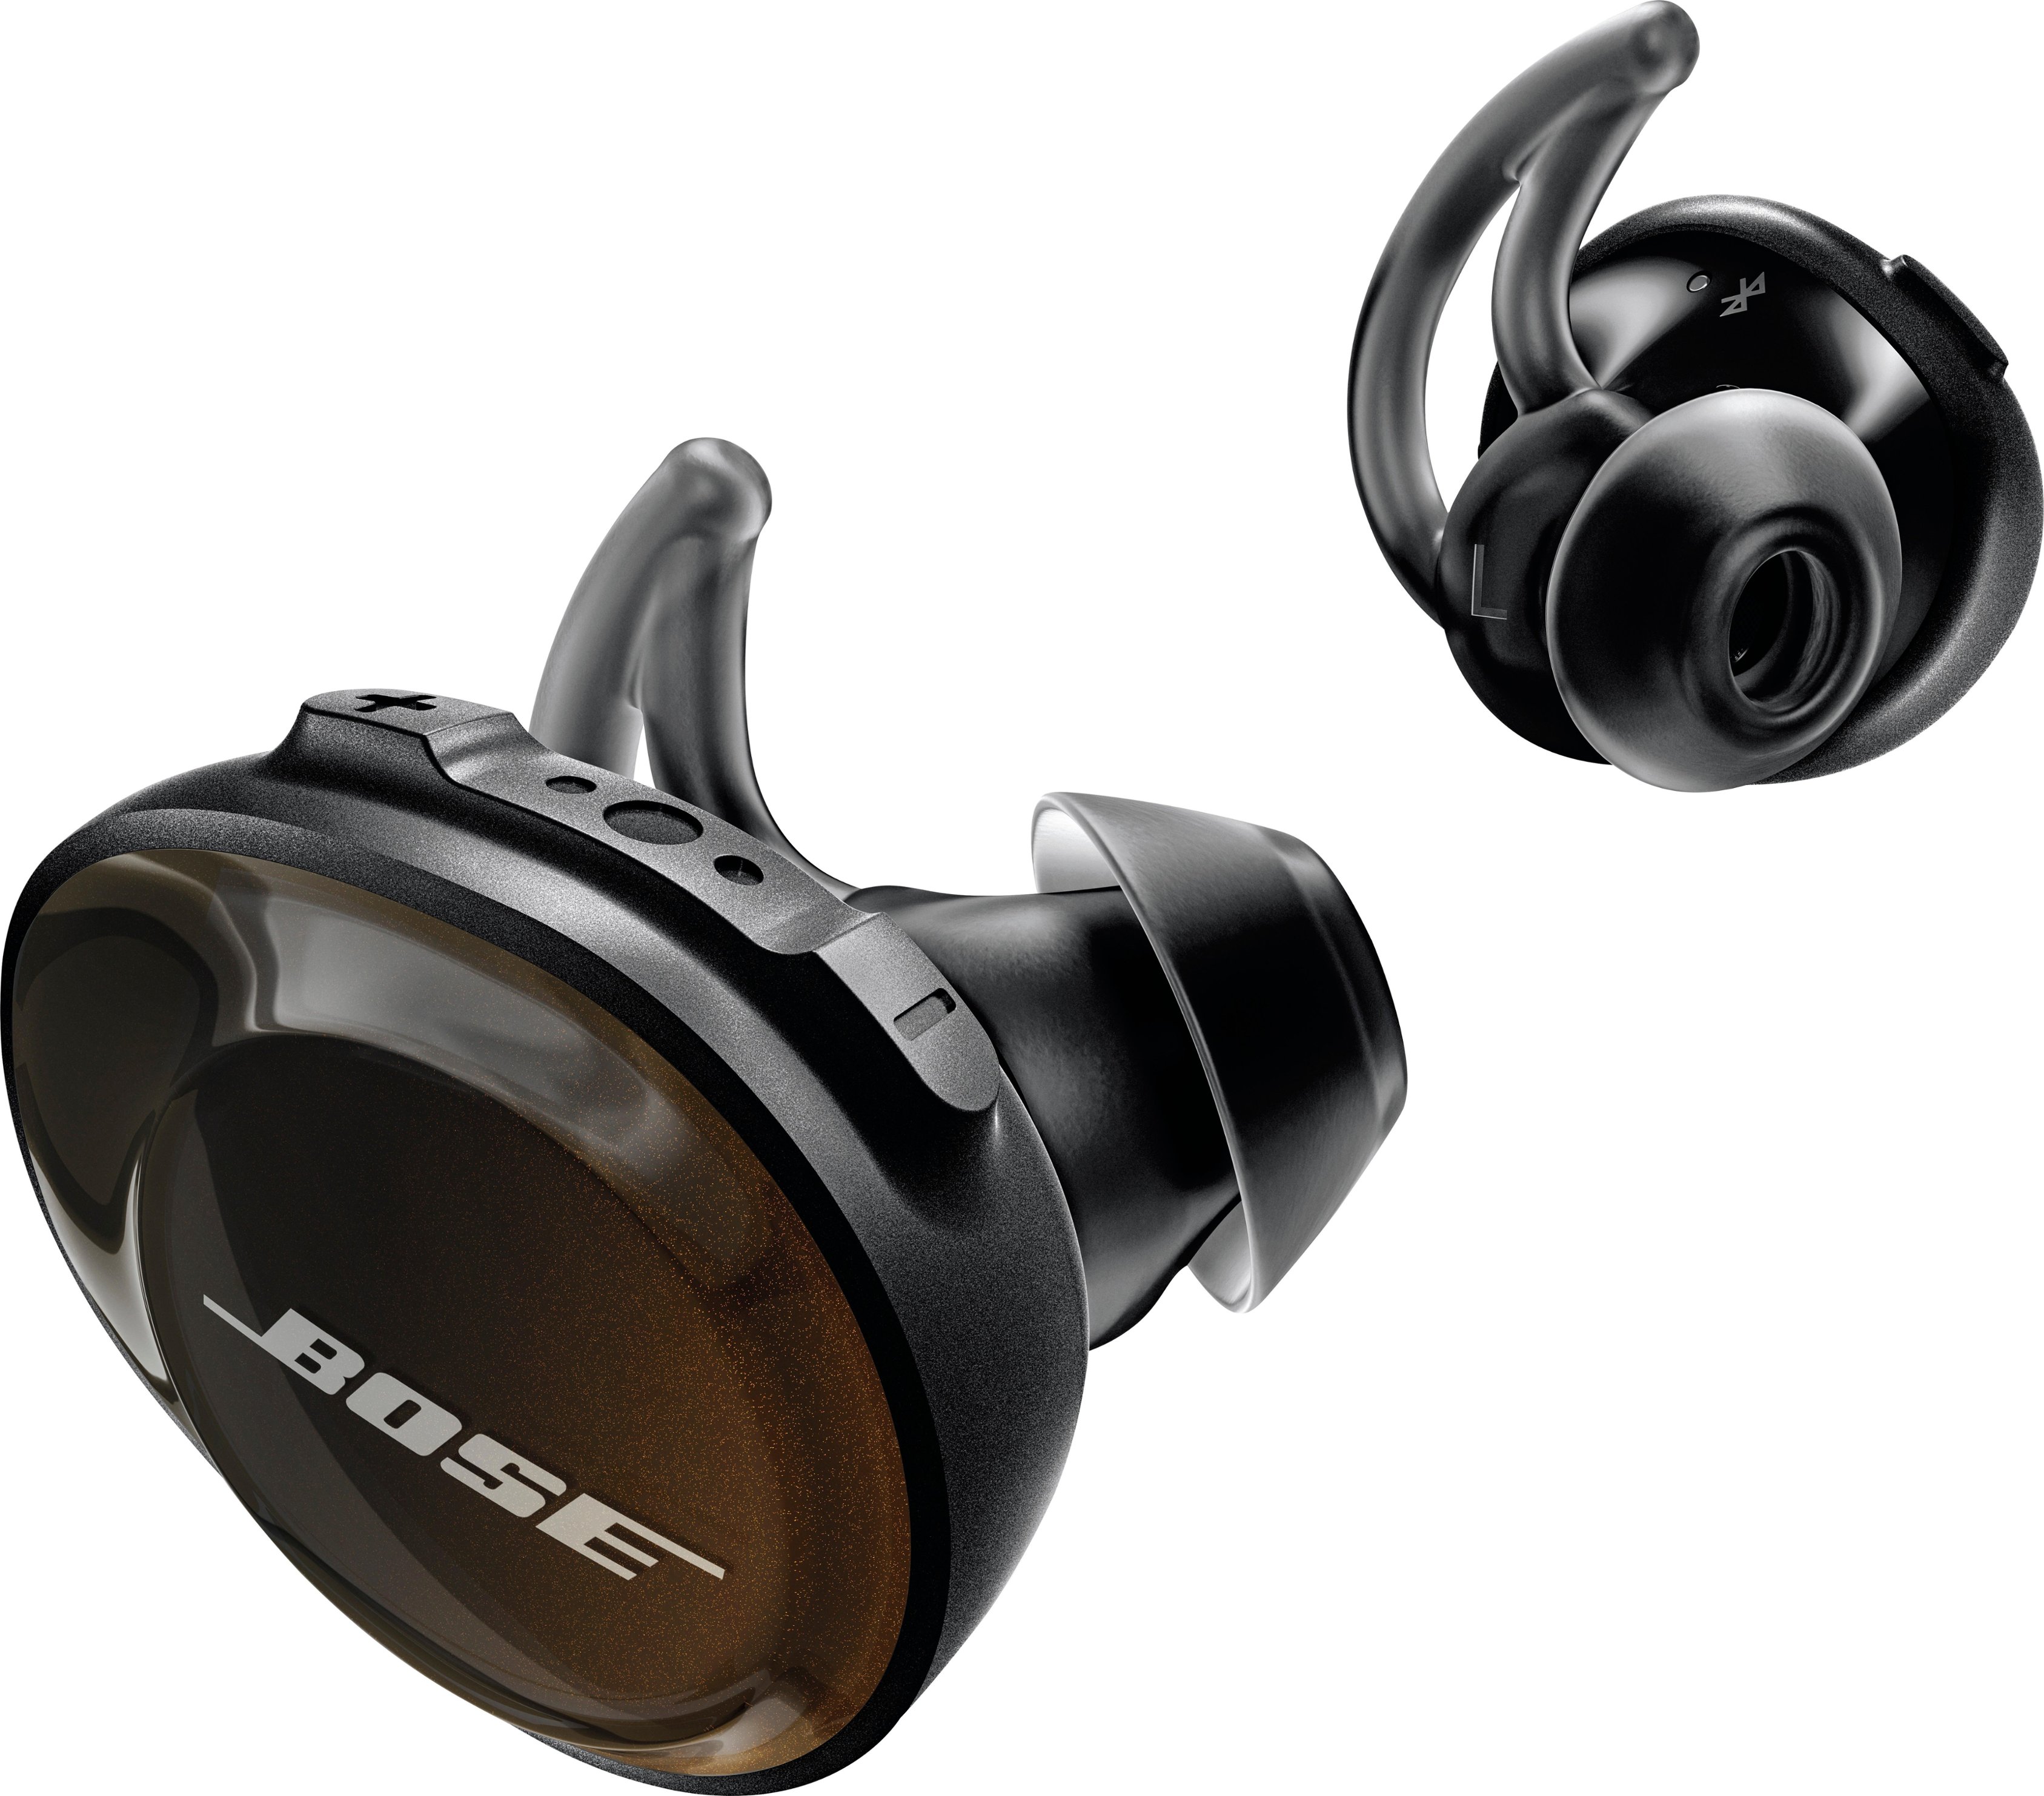 Bose wireless headphones with bluetooth